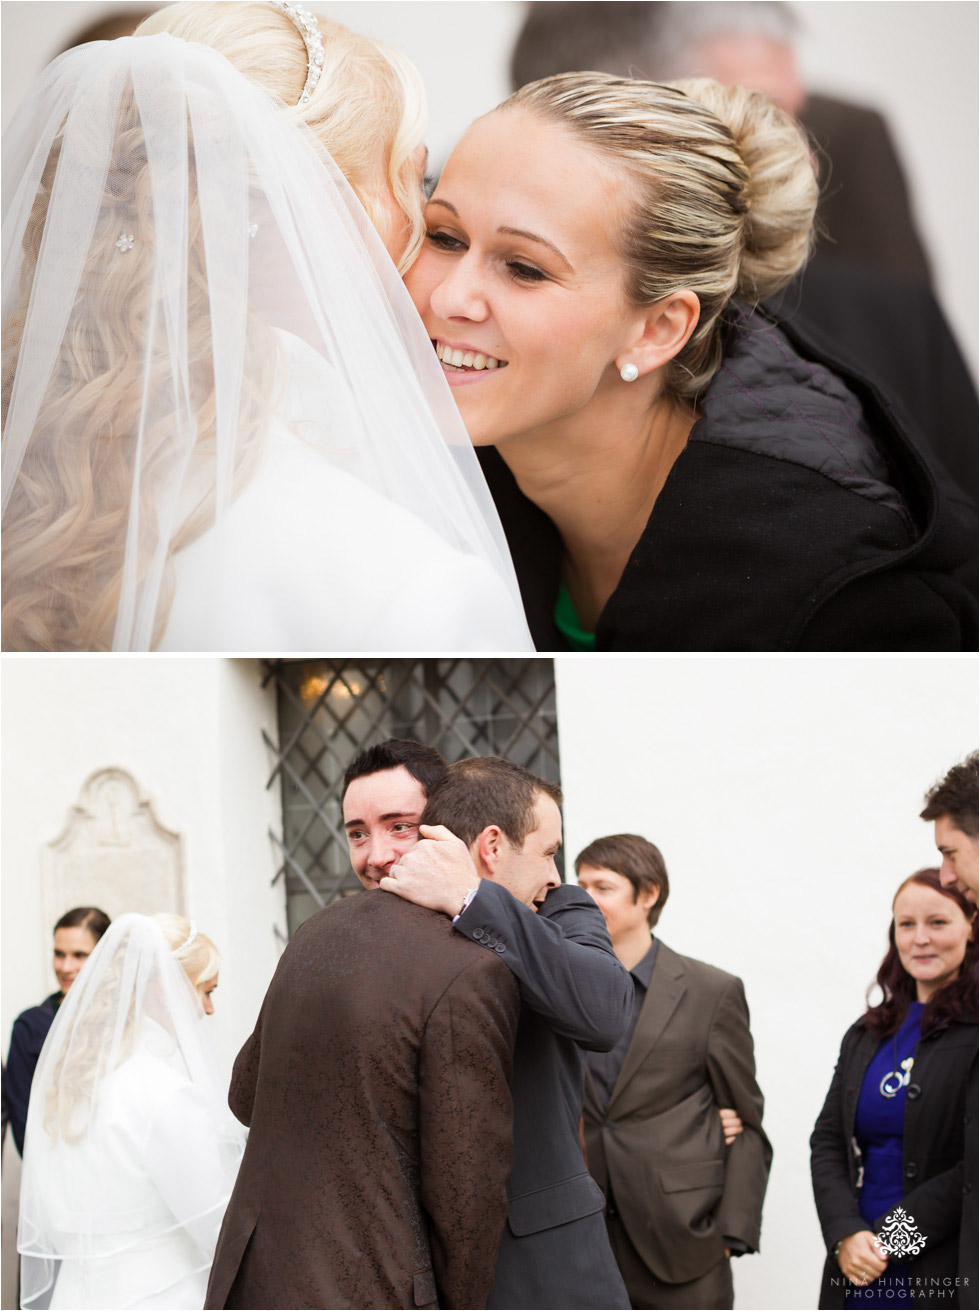 Corinna & Rene are hitched | Golf course wedding shoot - Blog of Nina Hintringer Photography - Wedding Photography, Wedding Reportage and Destination Weddings